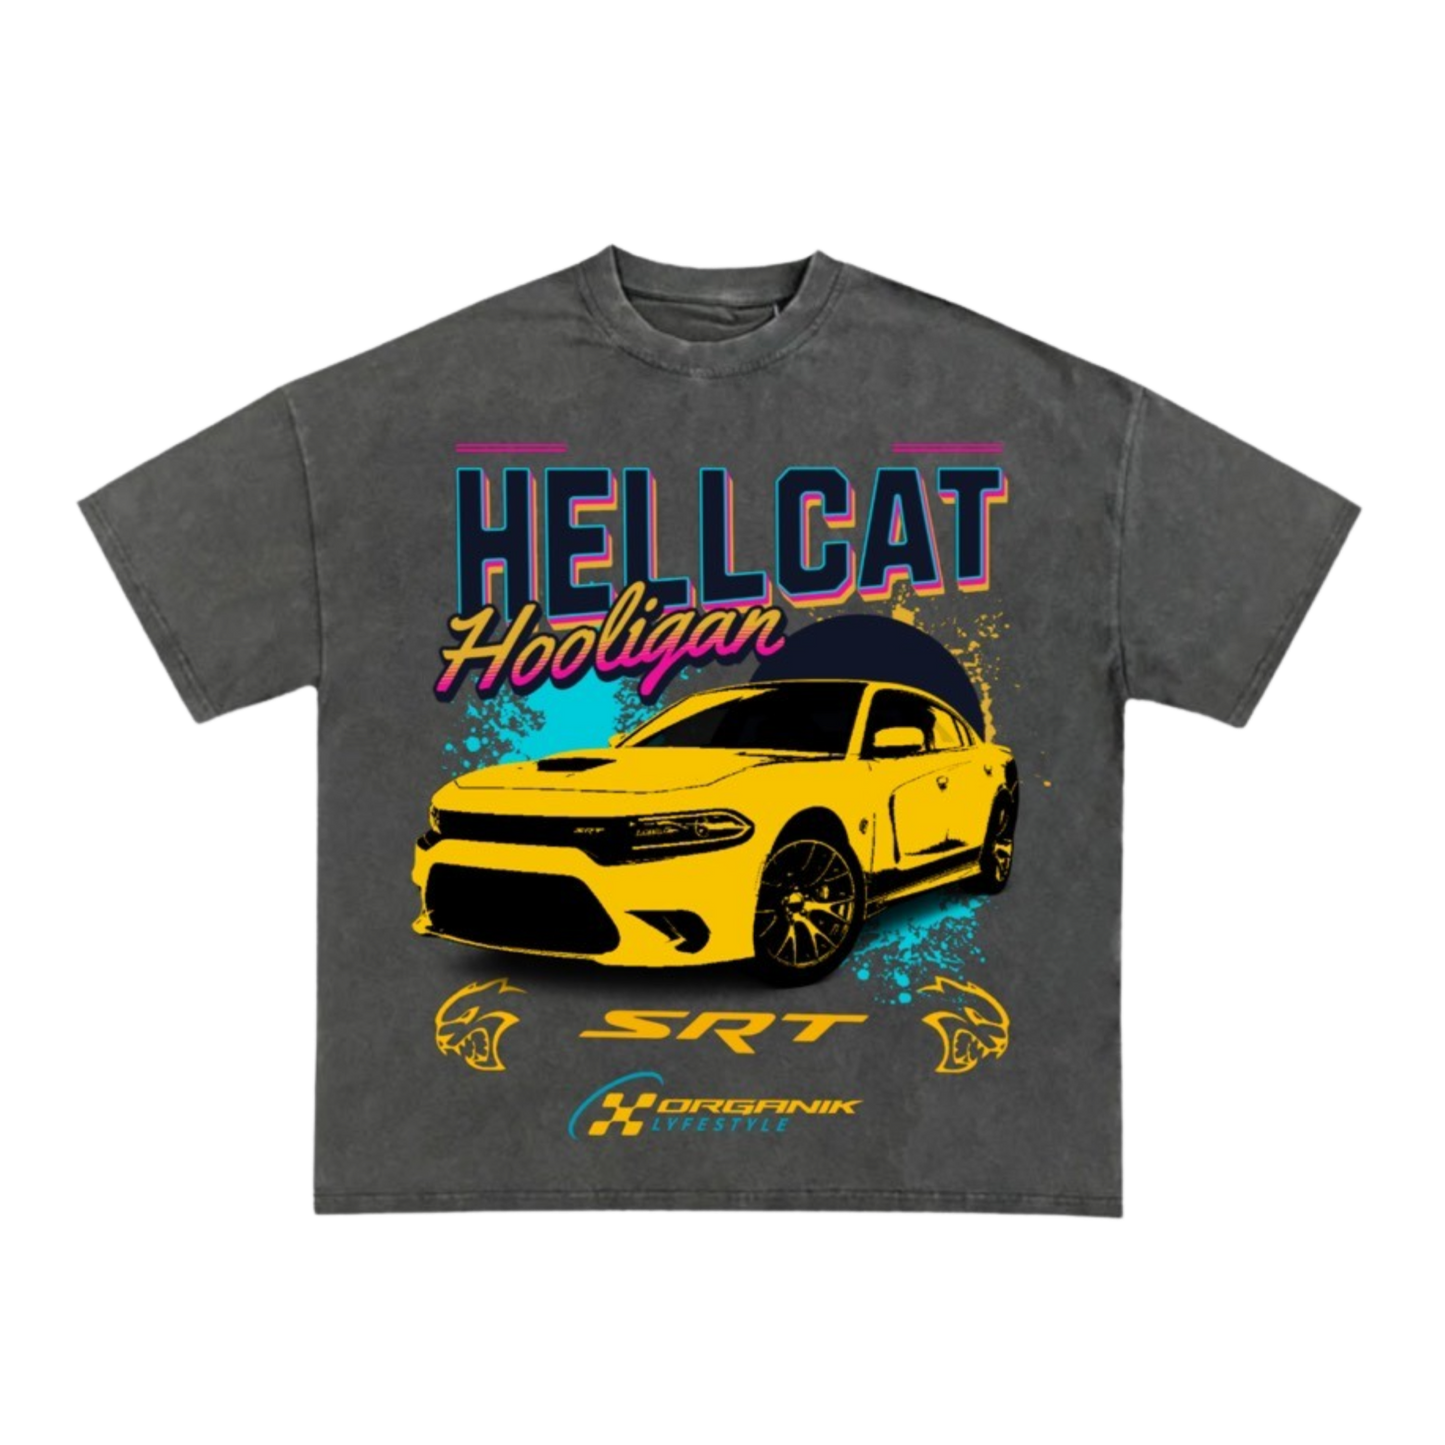 Organik Lyfestyle - Hellcat Hooligan T-Shirt - Grey